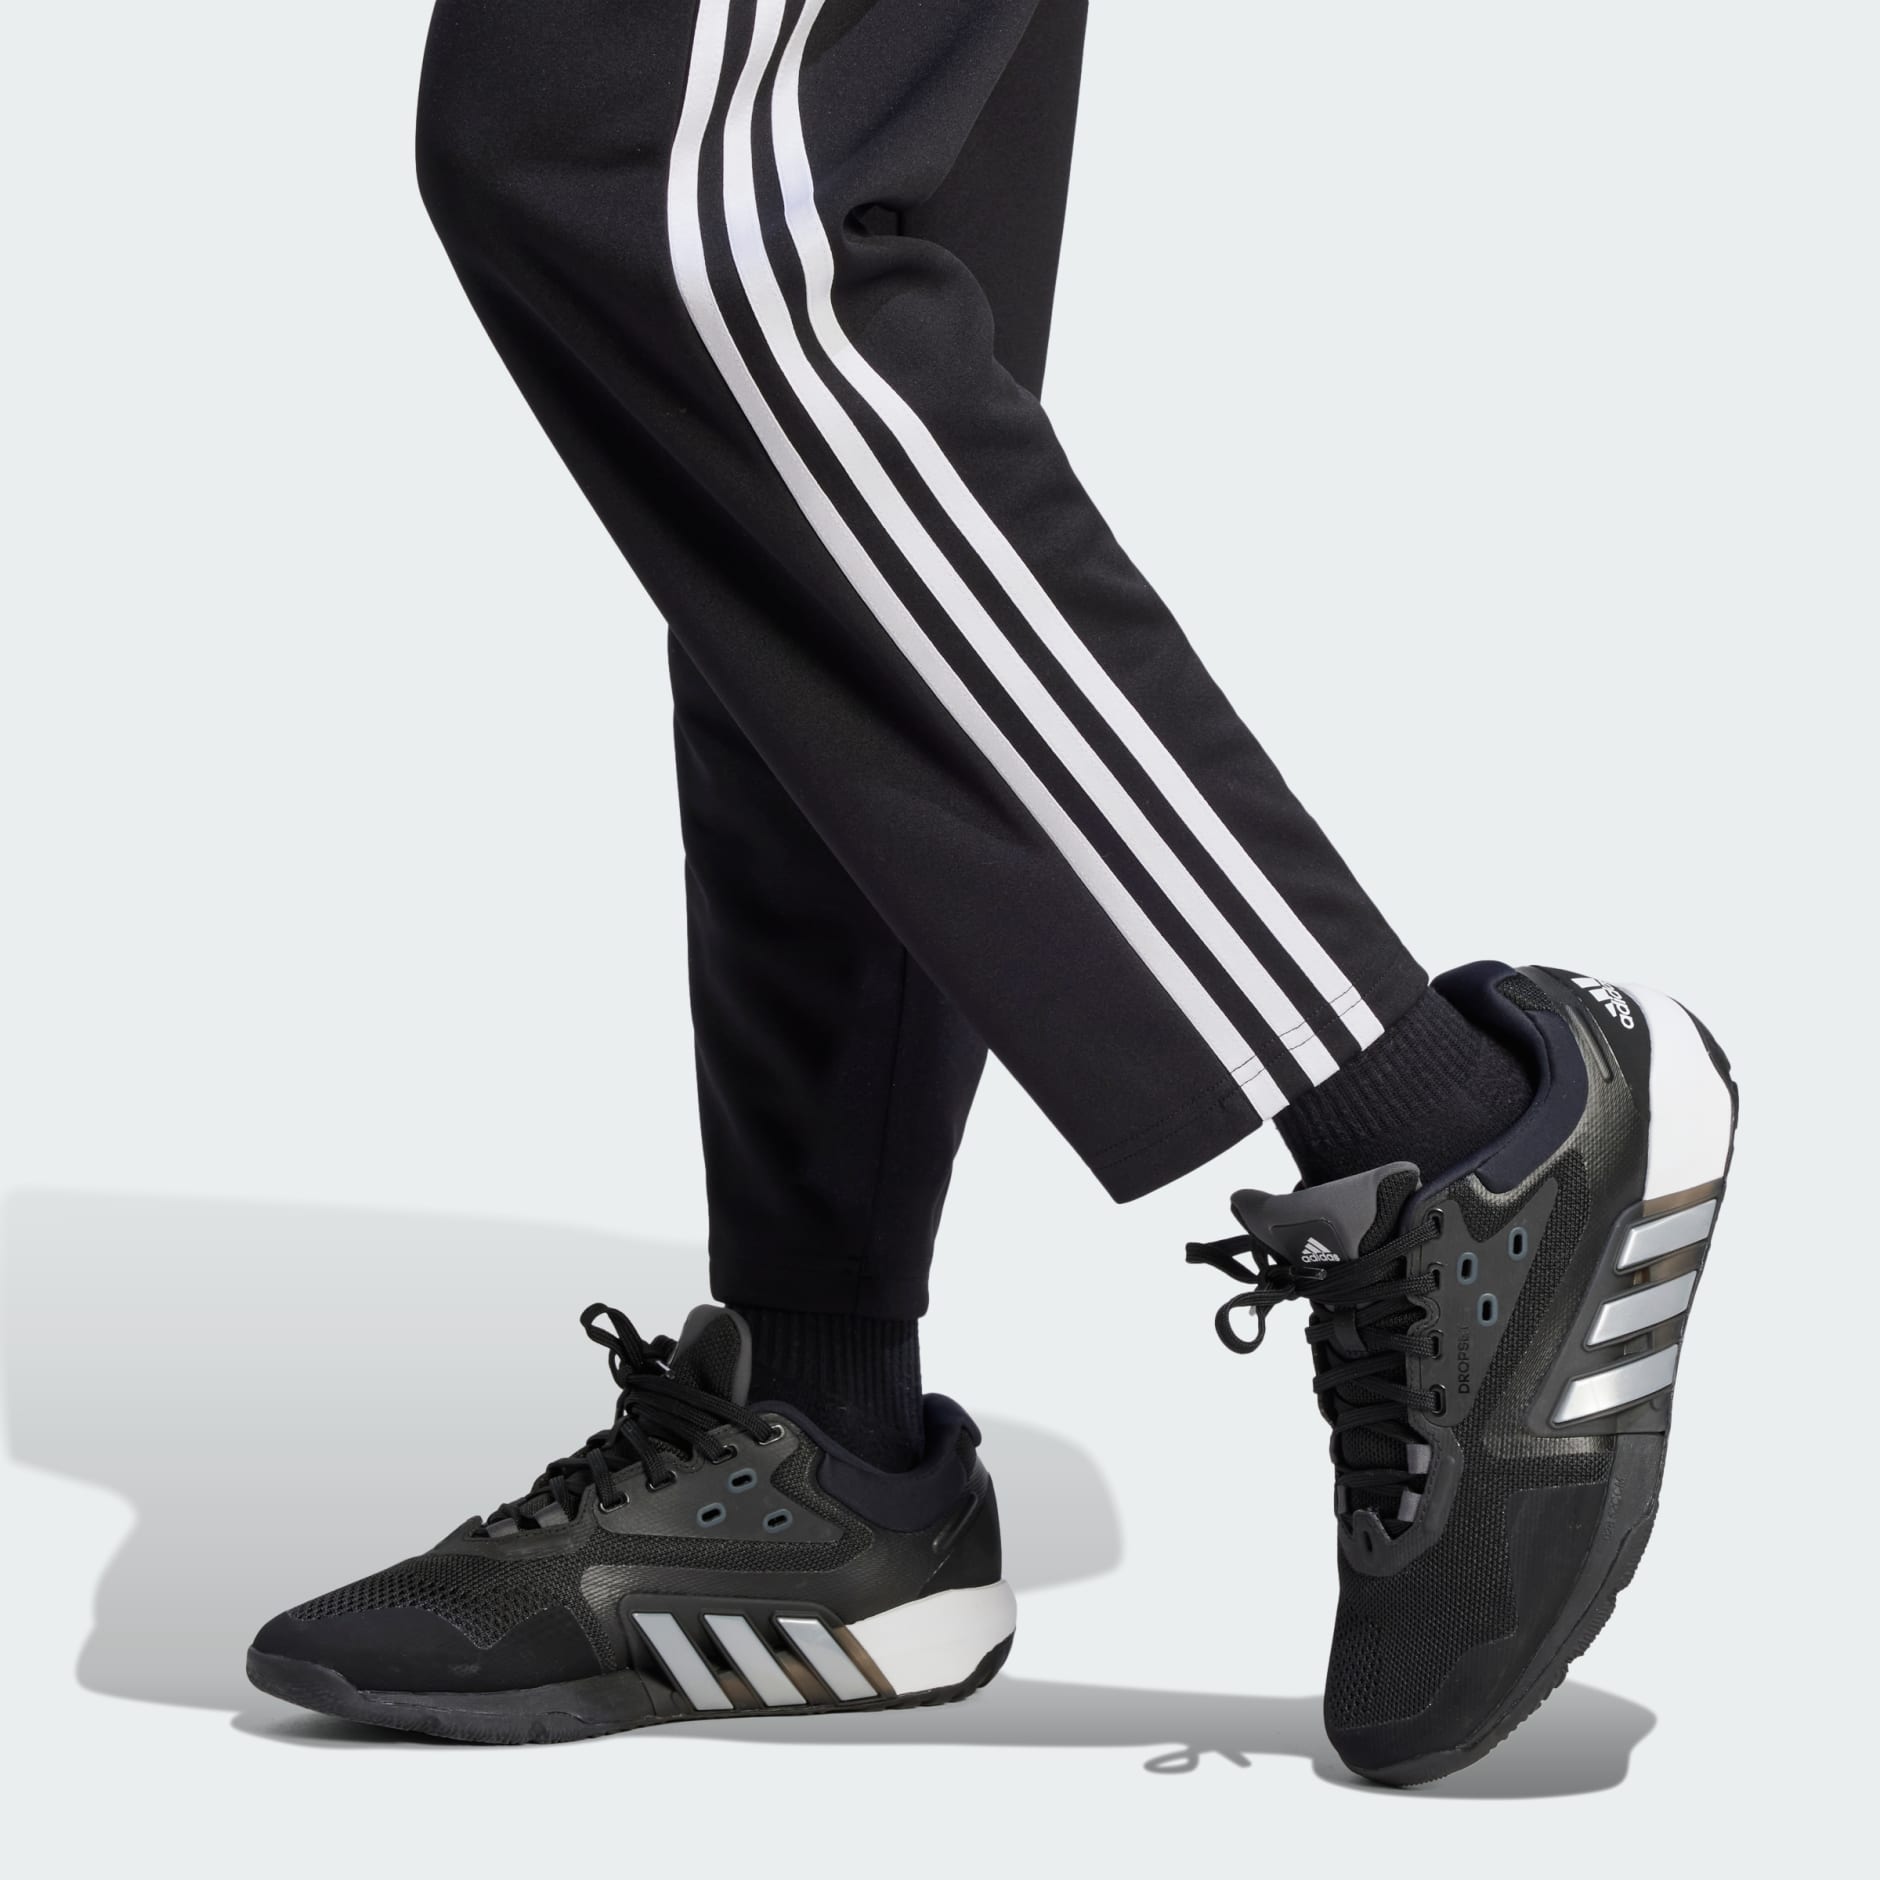 Women\'s Clothing - AEROREADY Train Essentials 3-Stripes Pants - Black |  adidas Oman